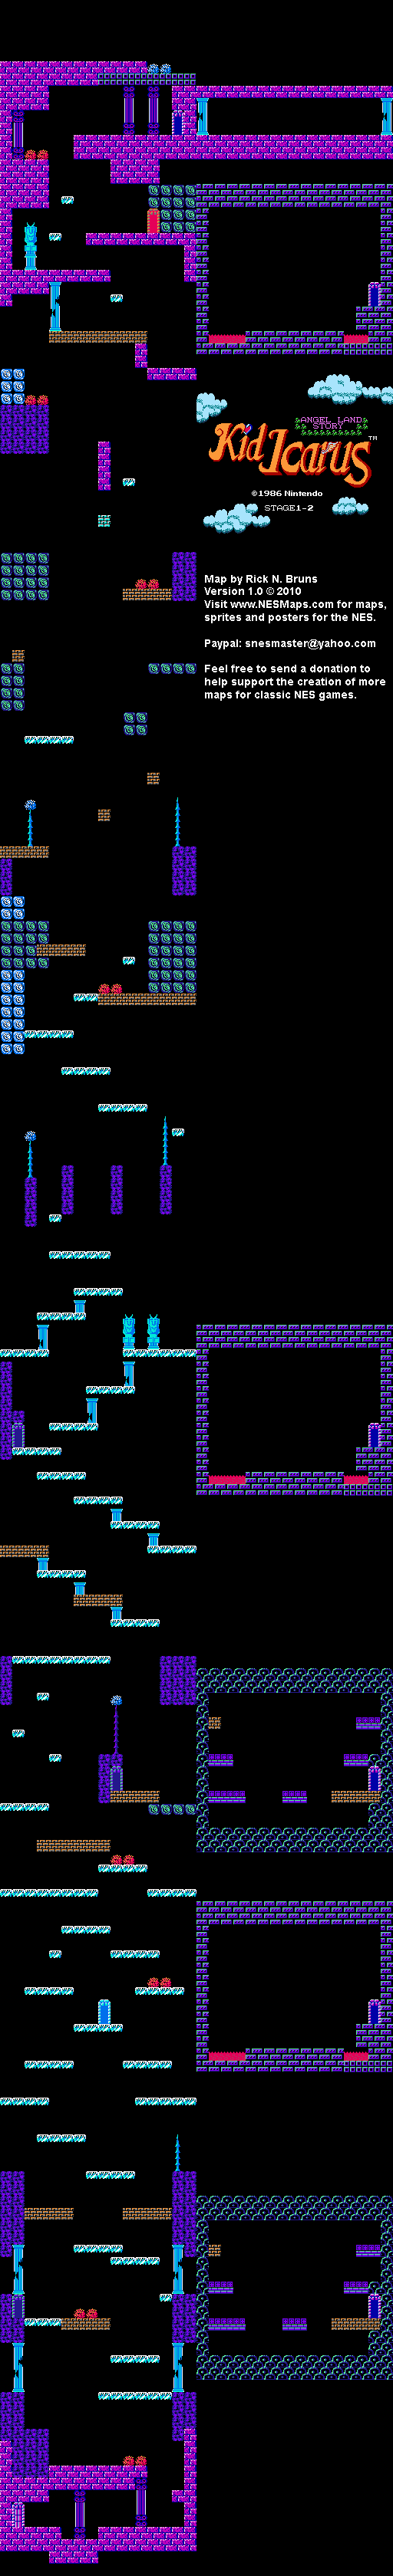 Kid Icarus - Stage 1-2 - NES Map BG